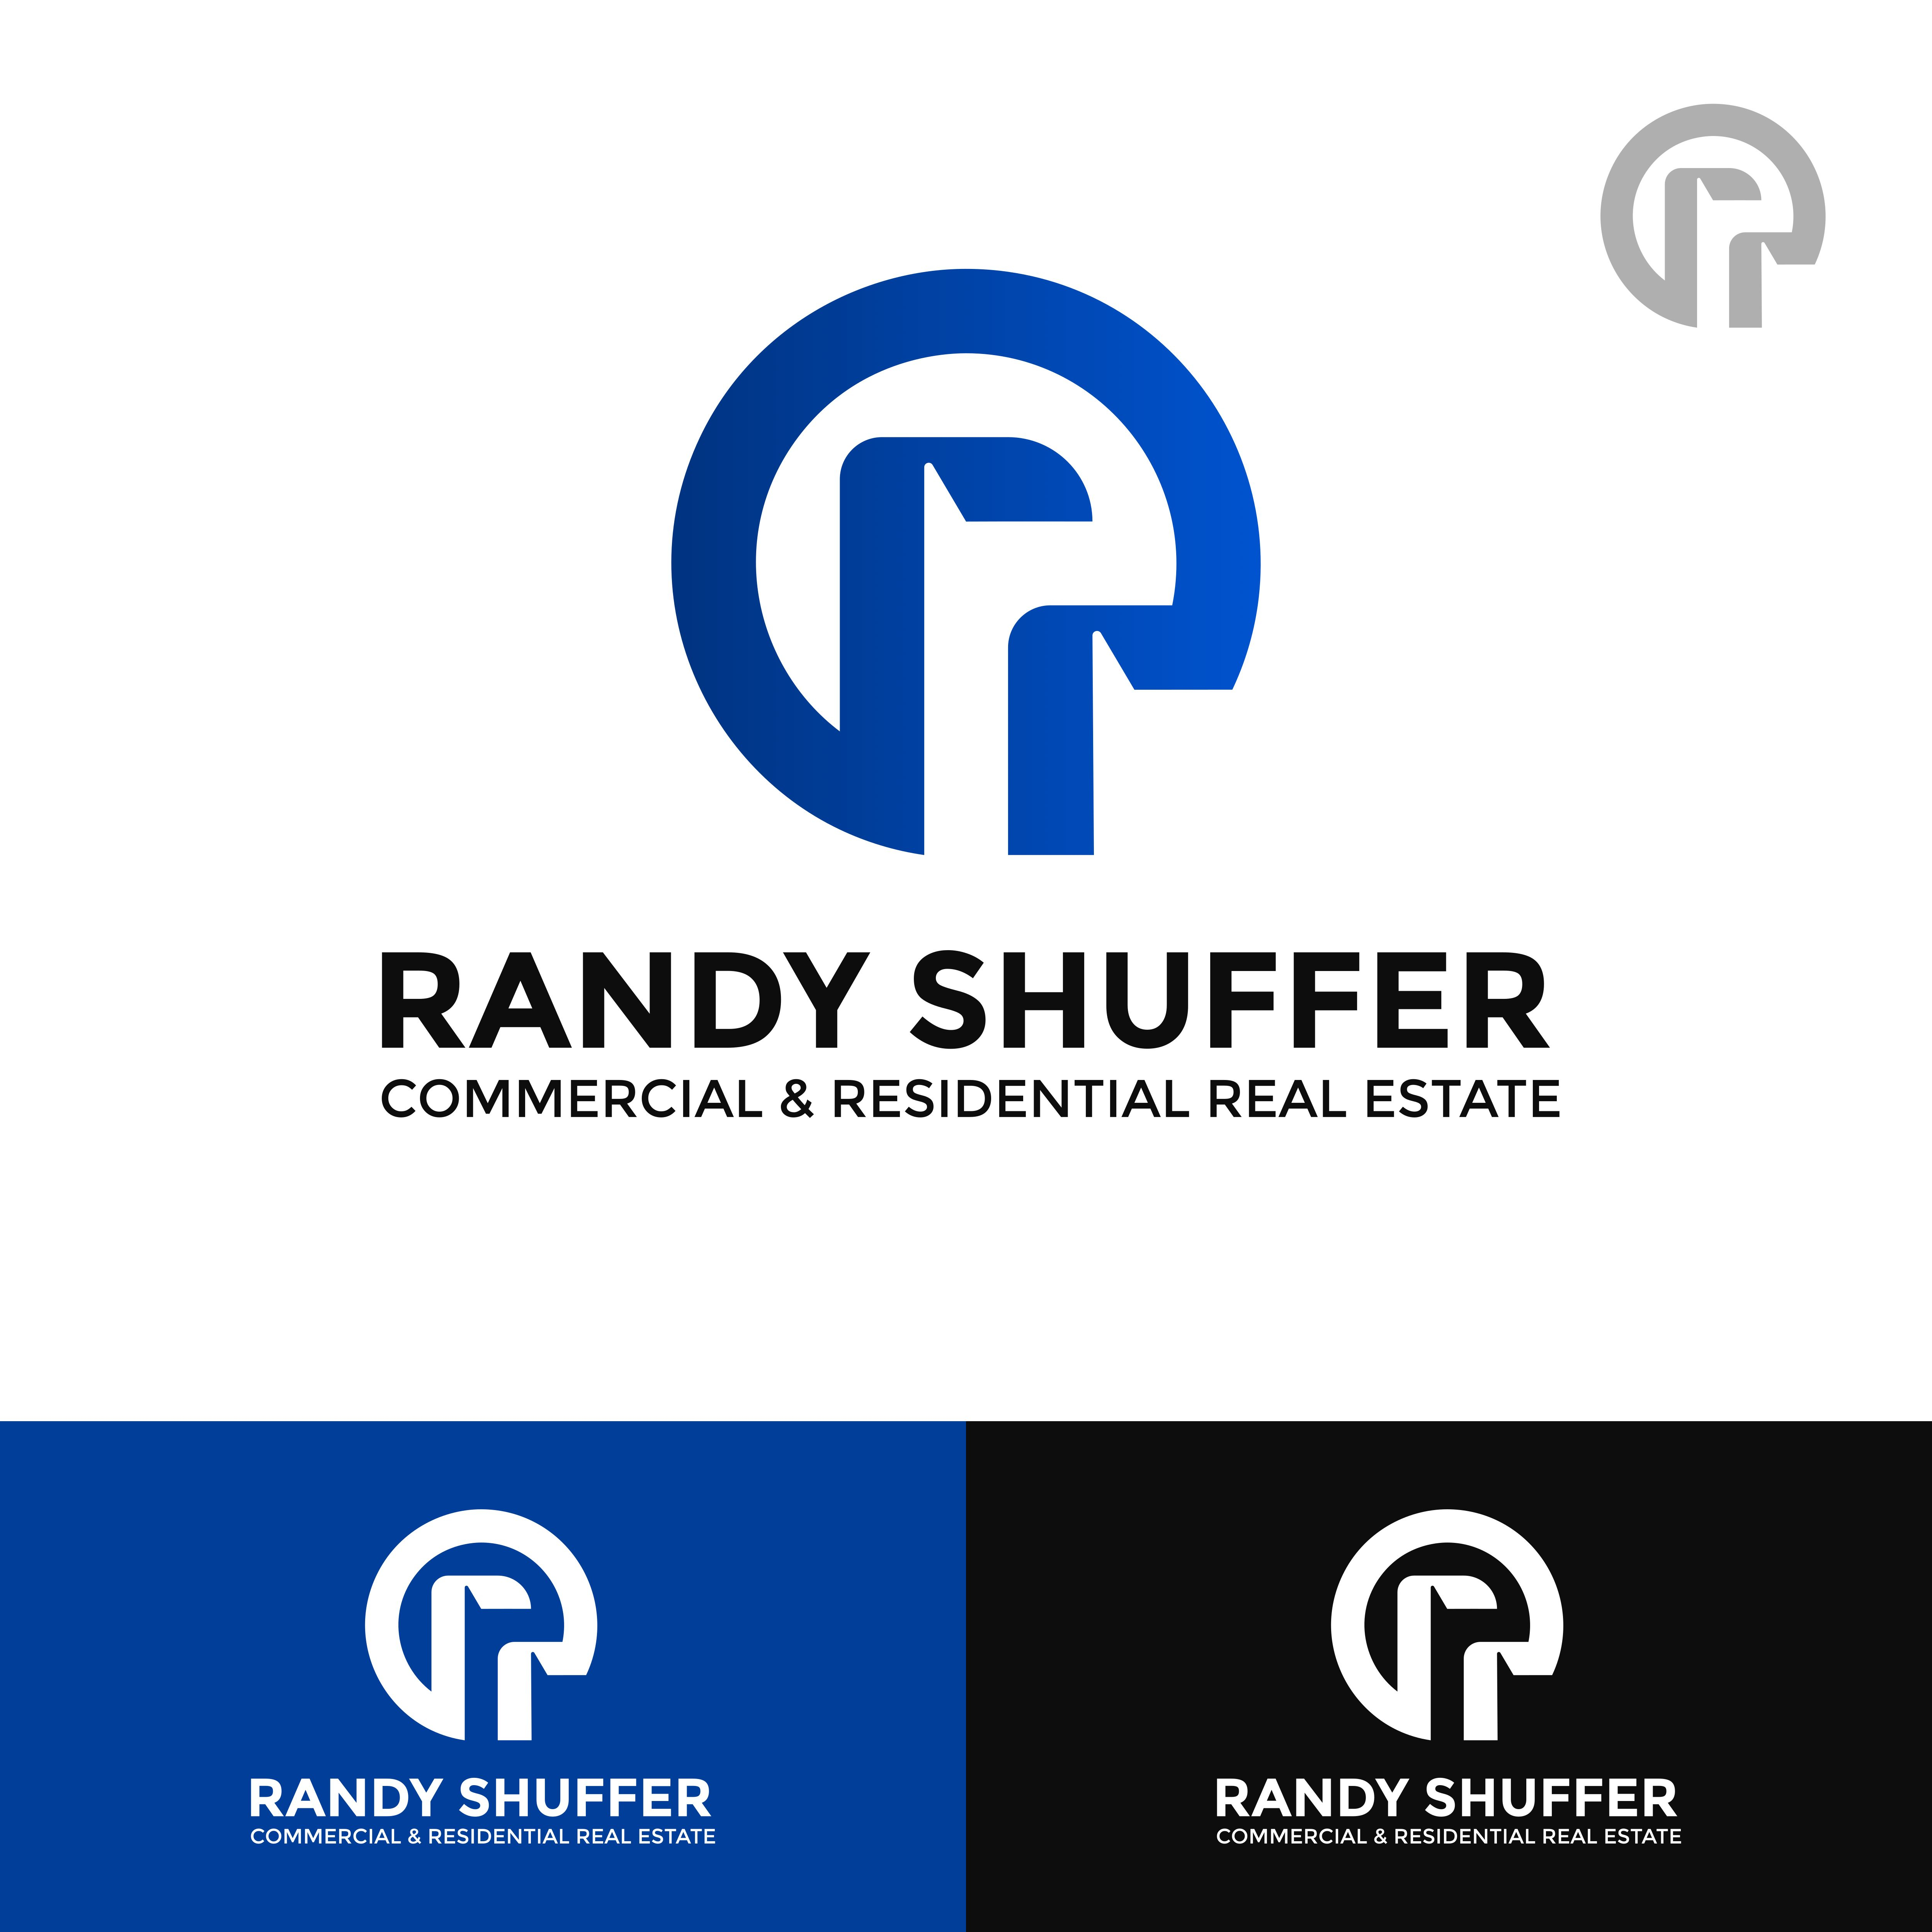 Randy Shuffer